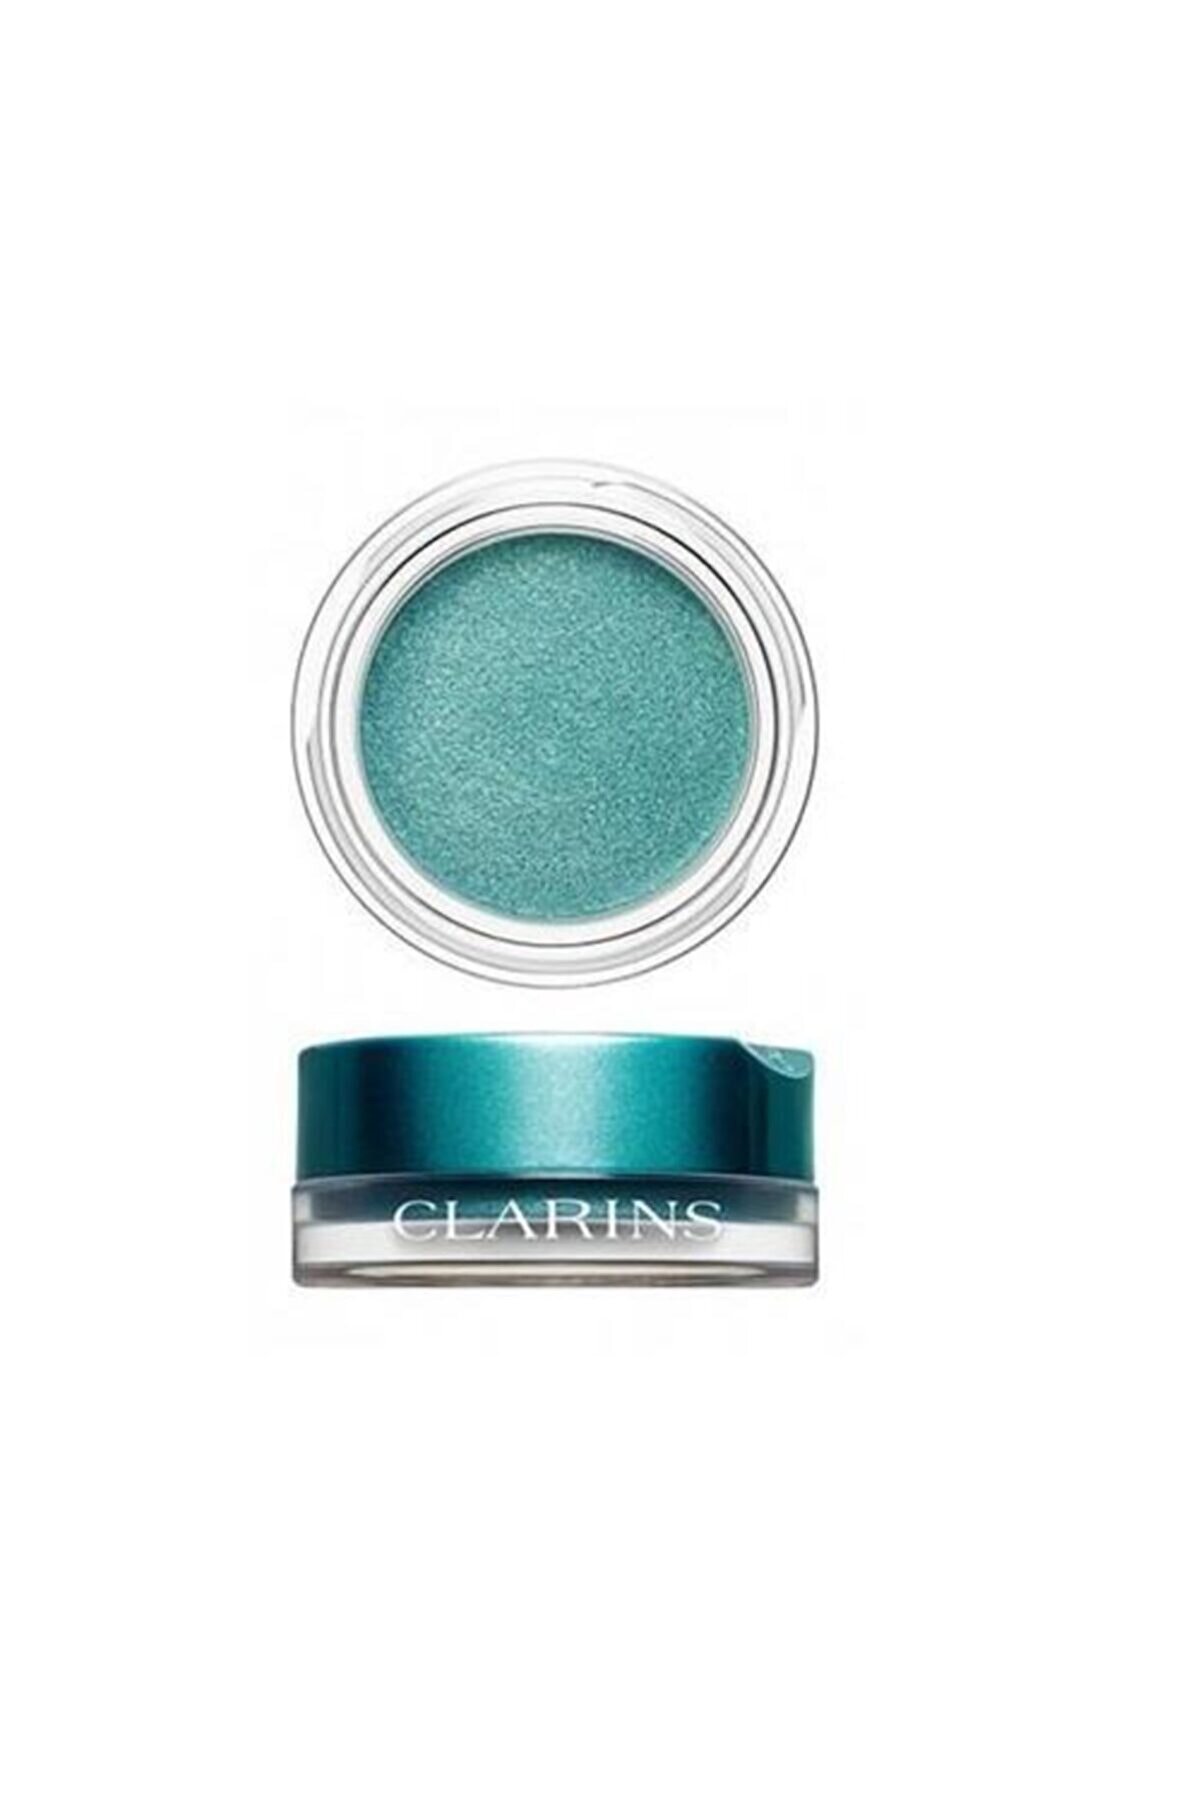 Clarins Ombre Iridescente Eyeshadow 02 Aquatic Green